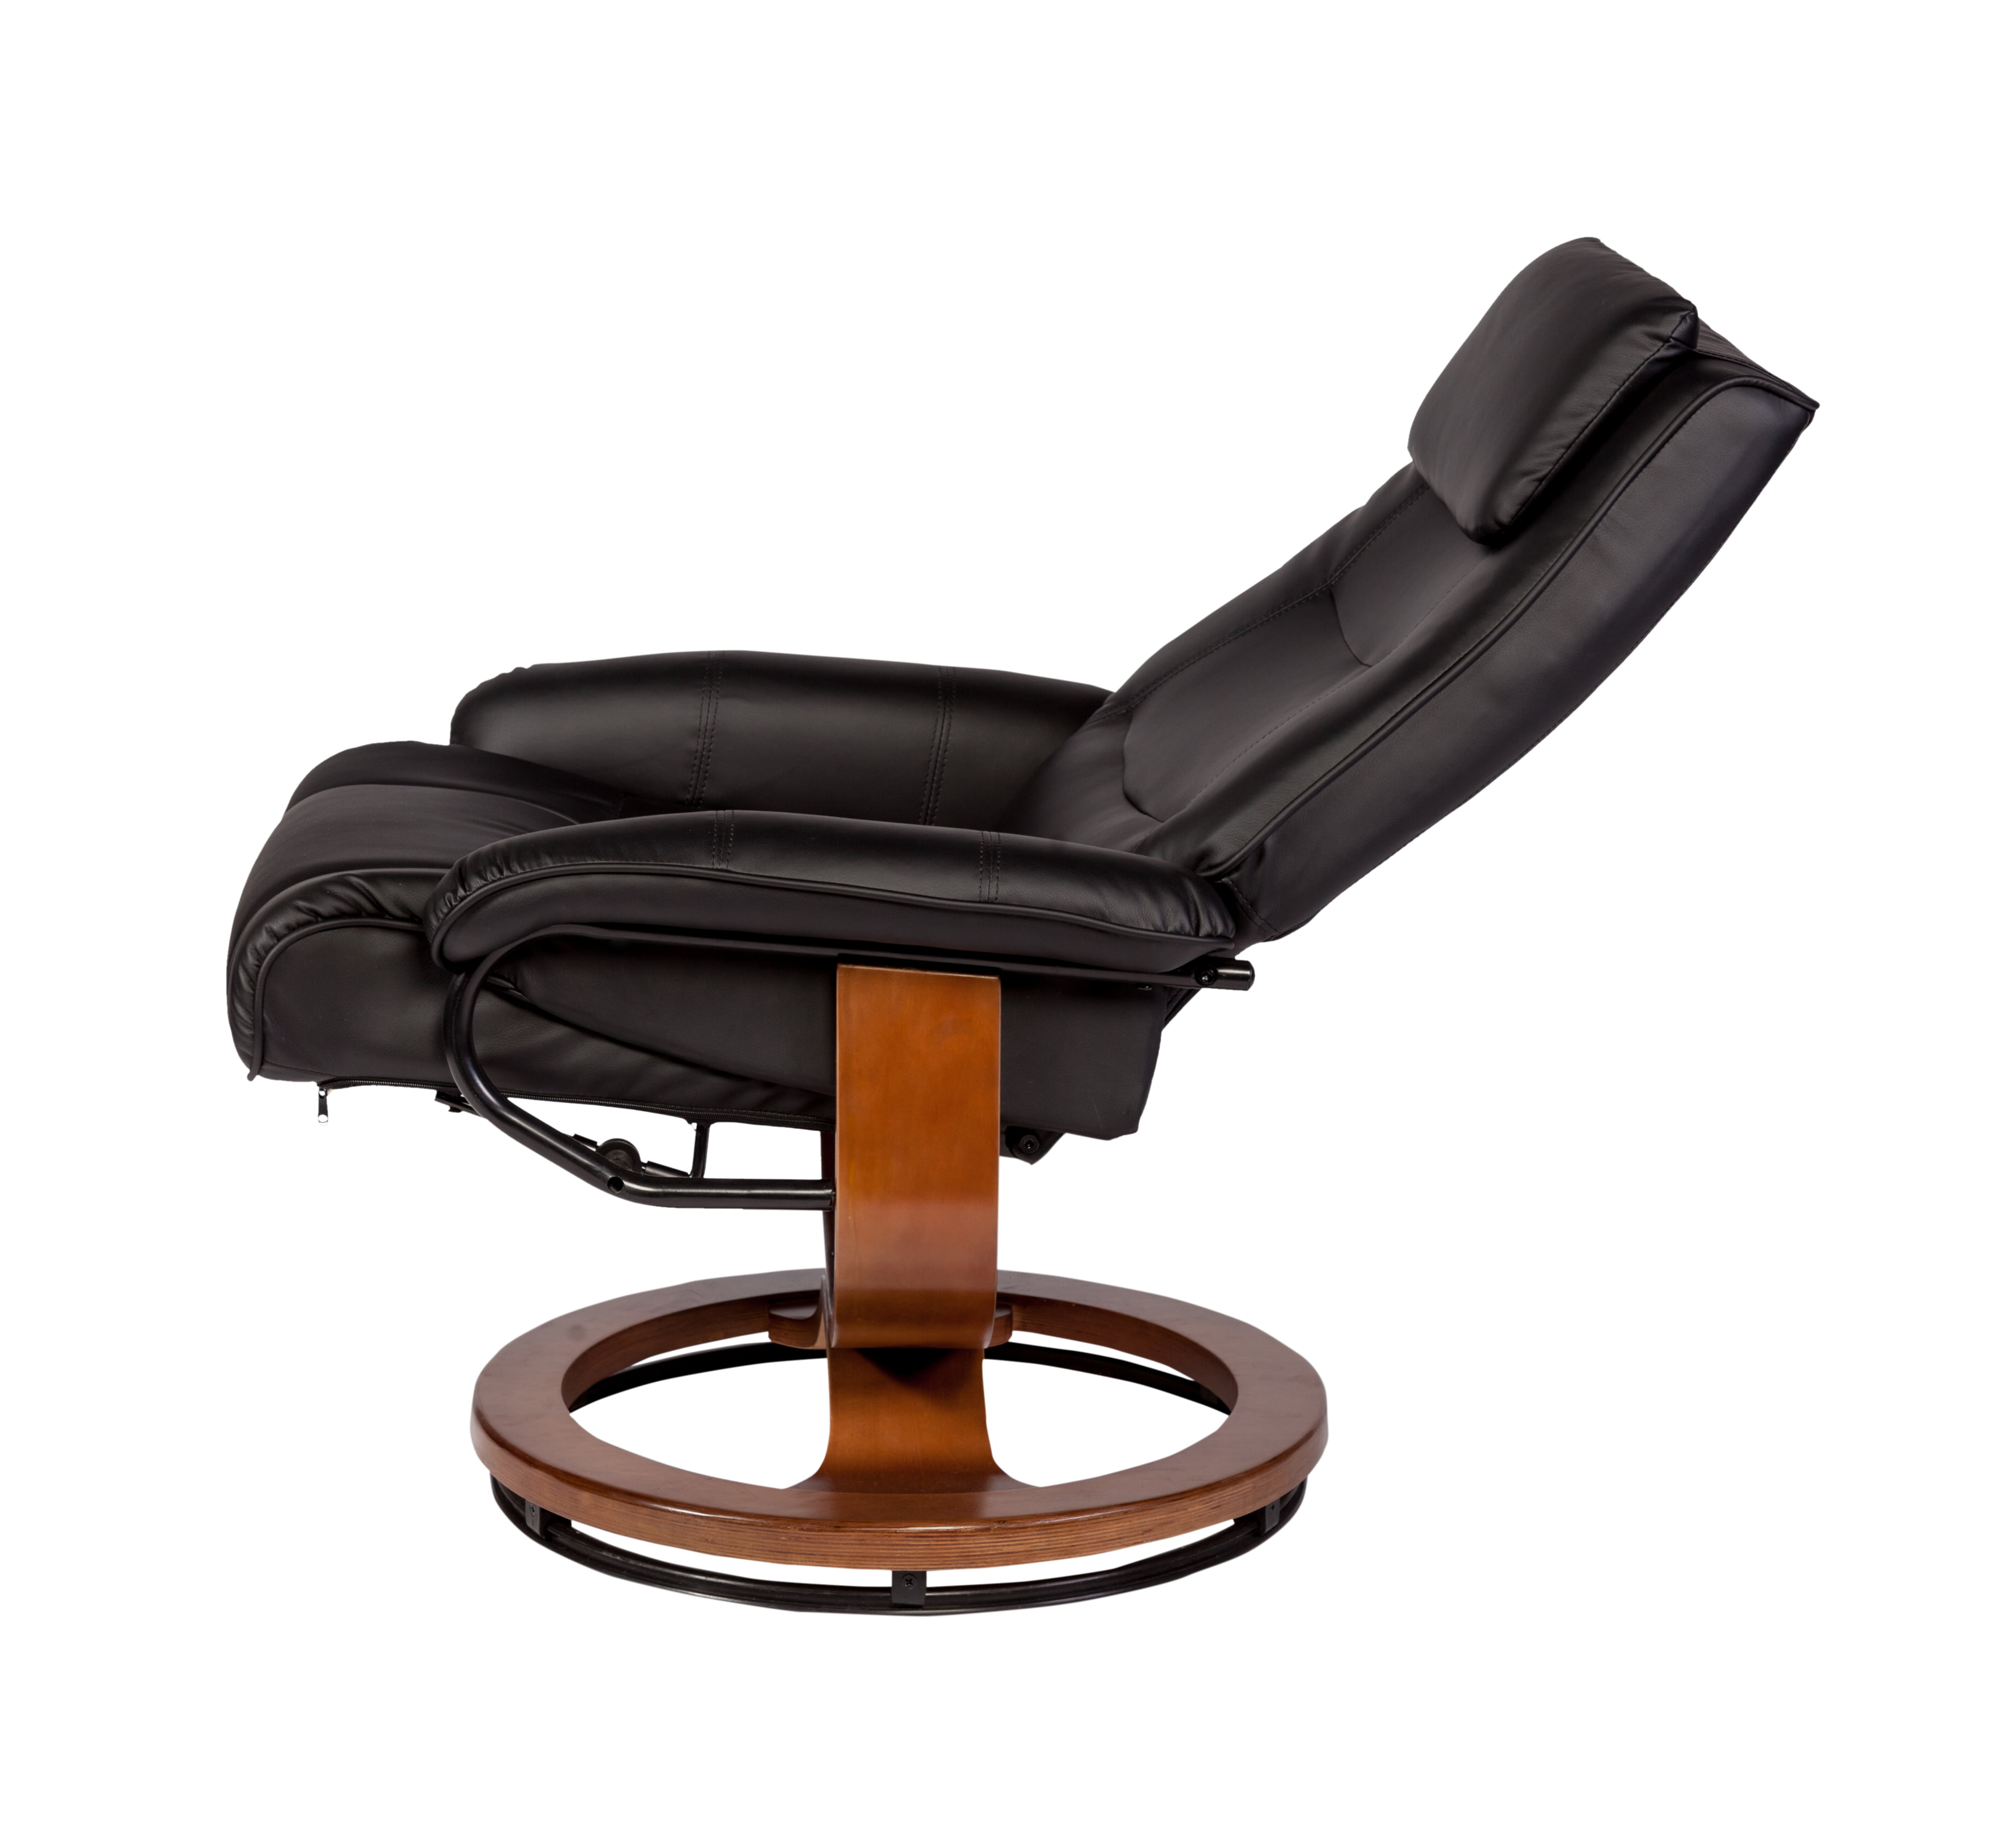 Relaxzen 60-2901 Lumbar Massage Cushion, Black